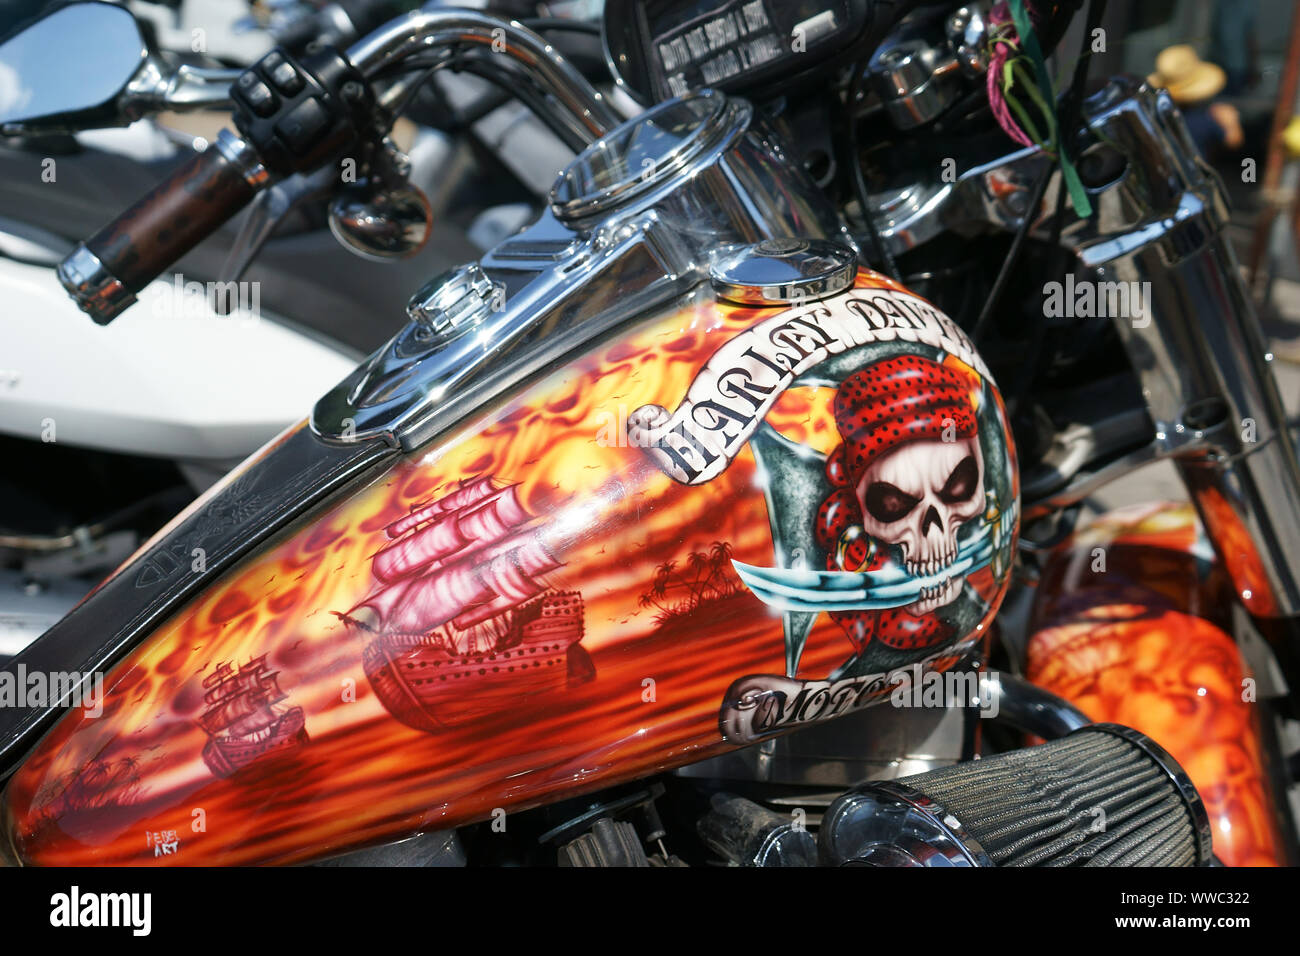 Pirate skull on Harley Davidson motor cycle petrol tank, Cagliari, Sardinia, Italy Stock Photo